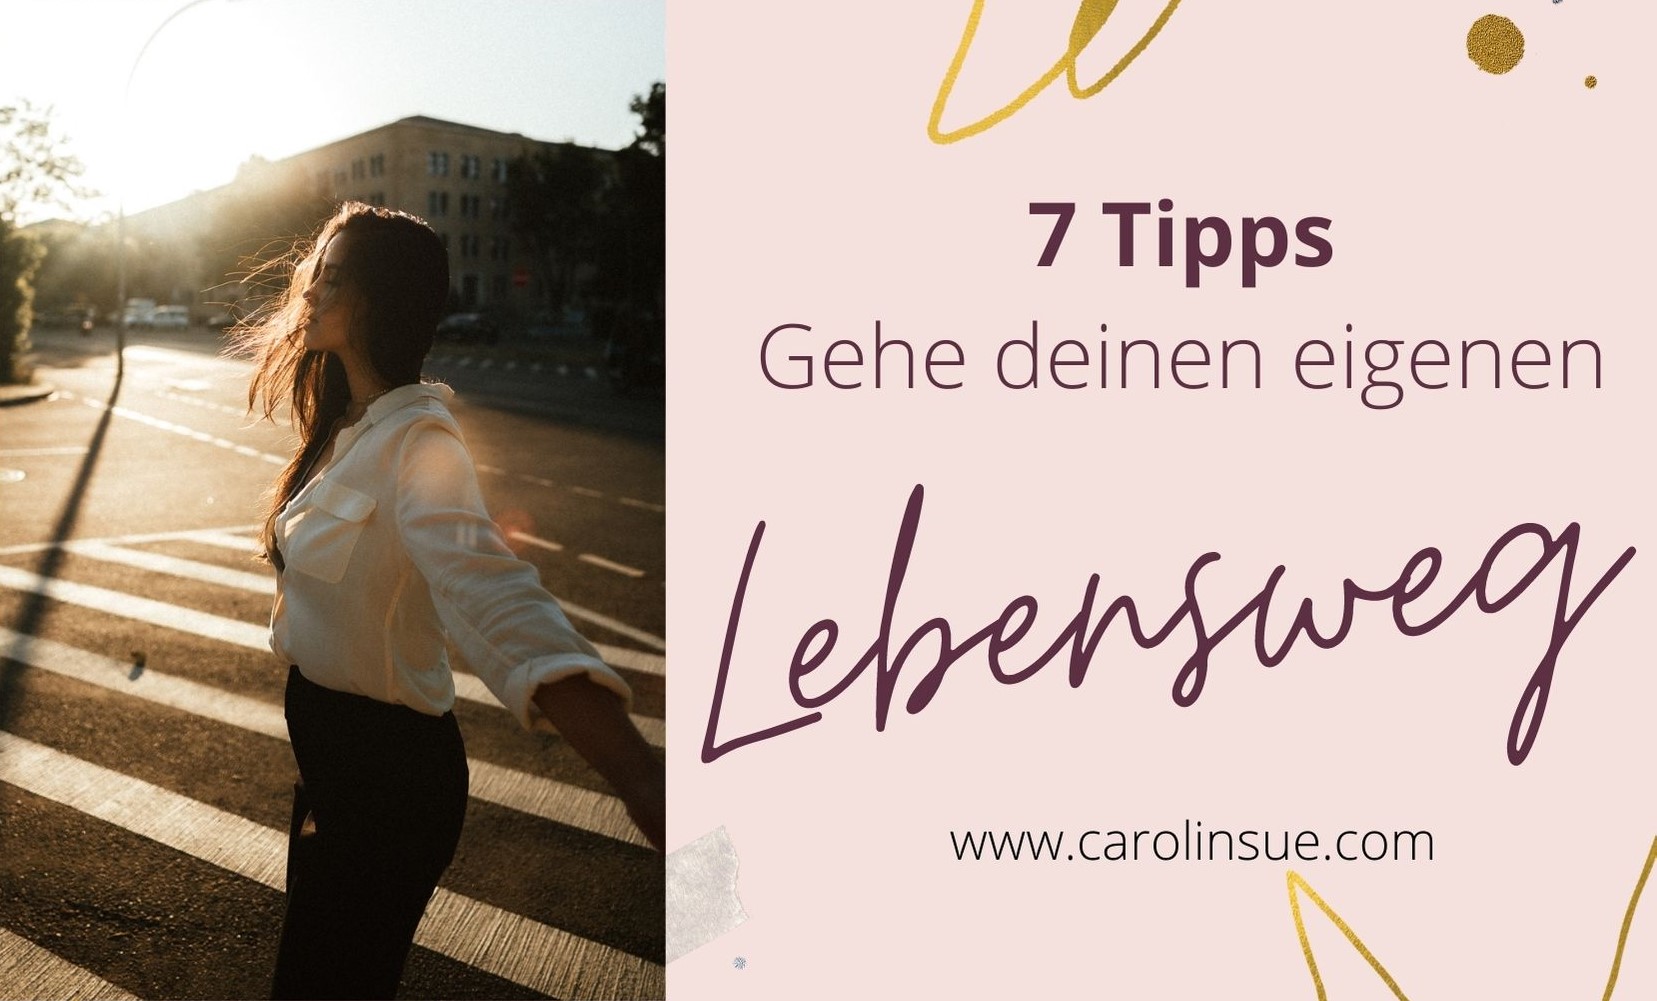 7 Tipps – Den eigenen Lebensweg gehen